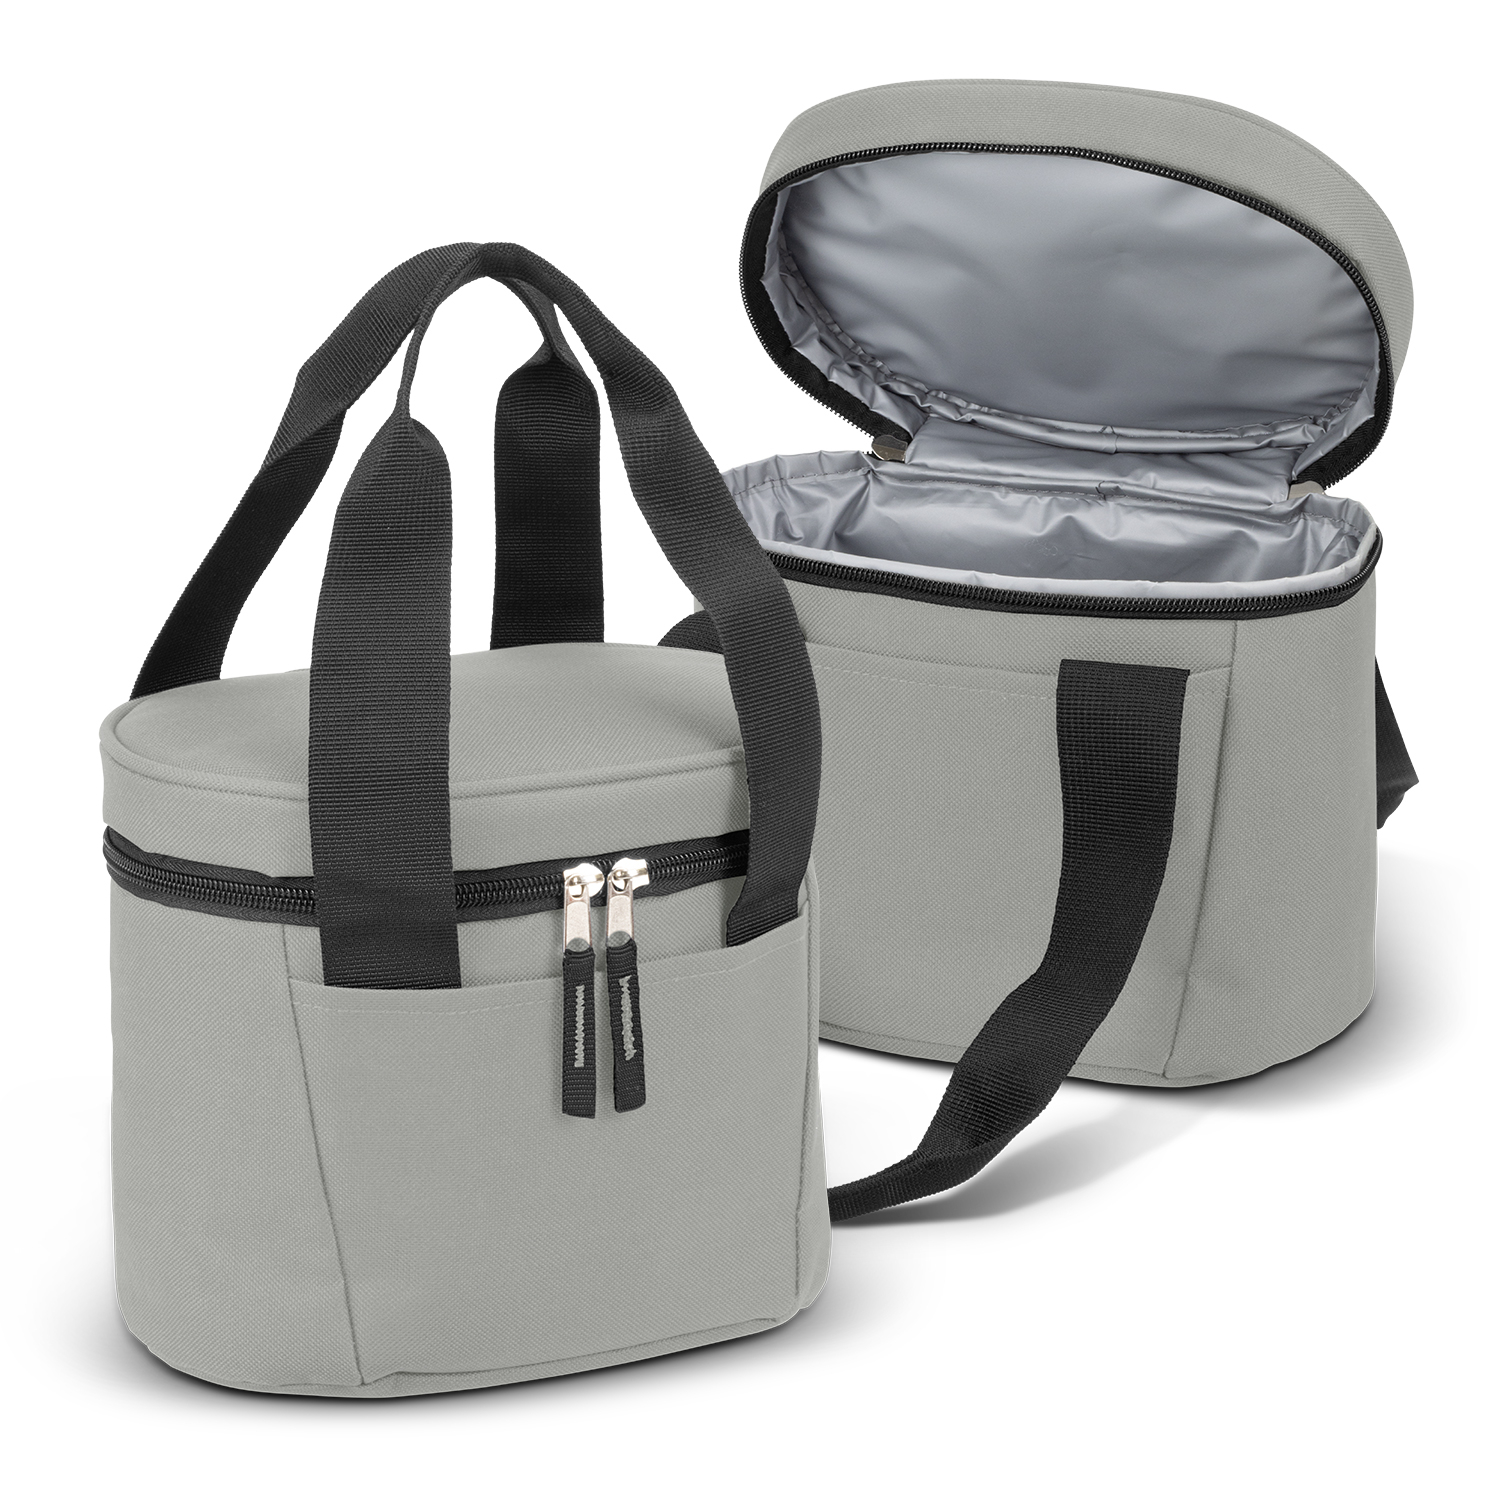 Cooler Bags Caspian Lunch Cooler Bag bag